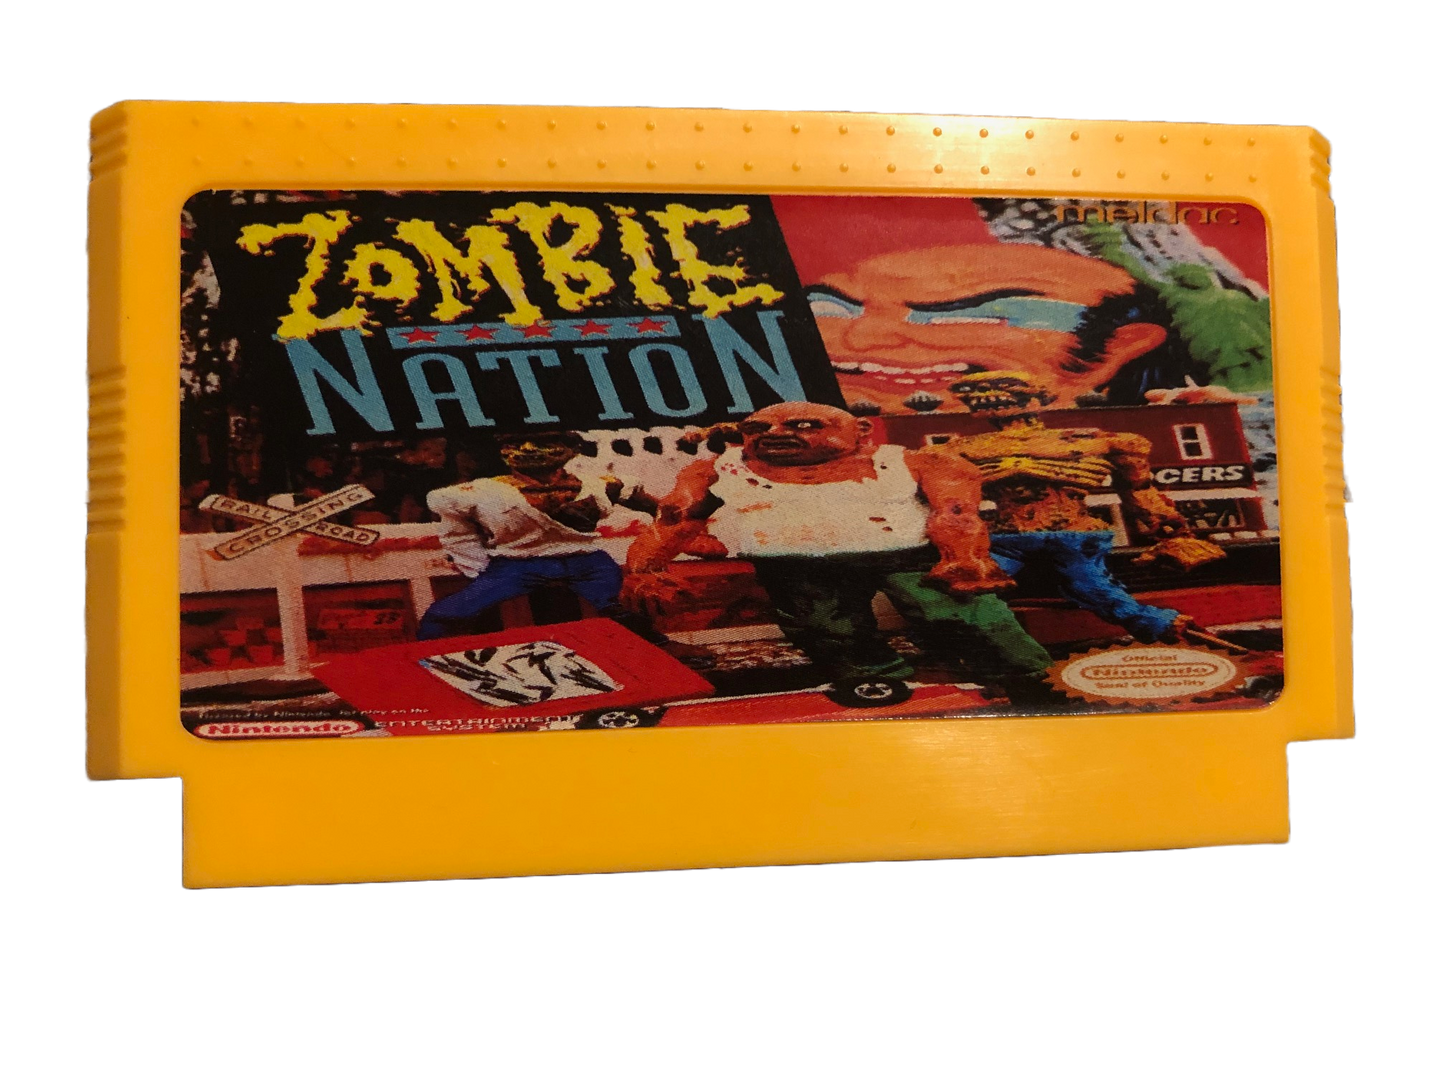 Zombie Nation Japanese Nintendo Famicom Video Game